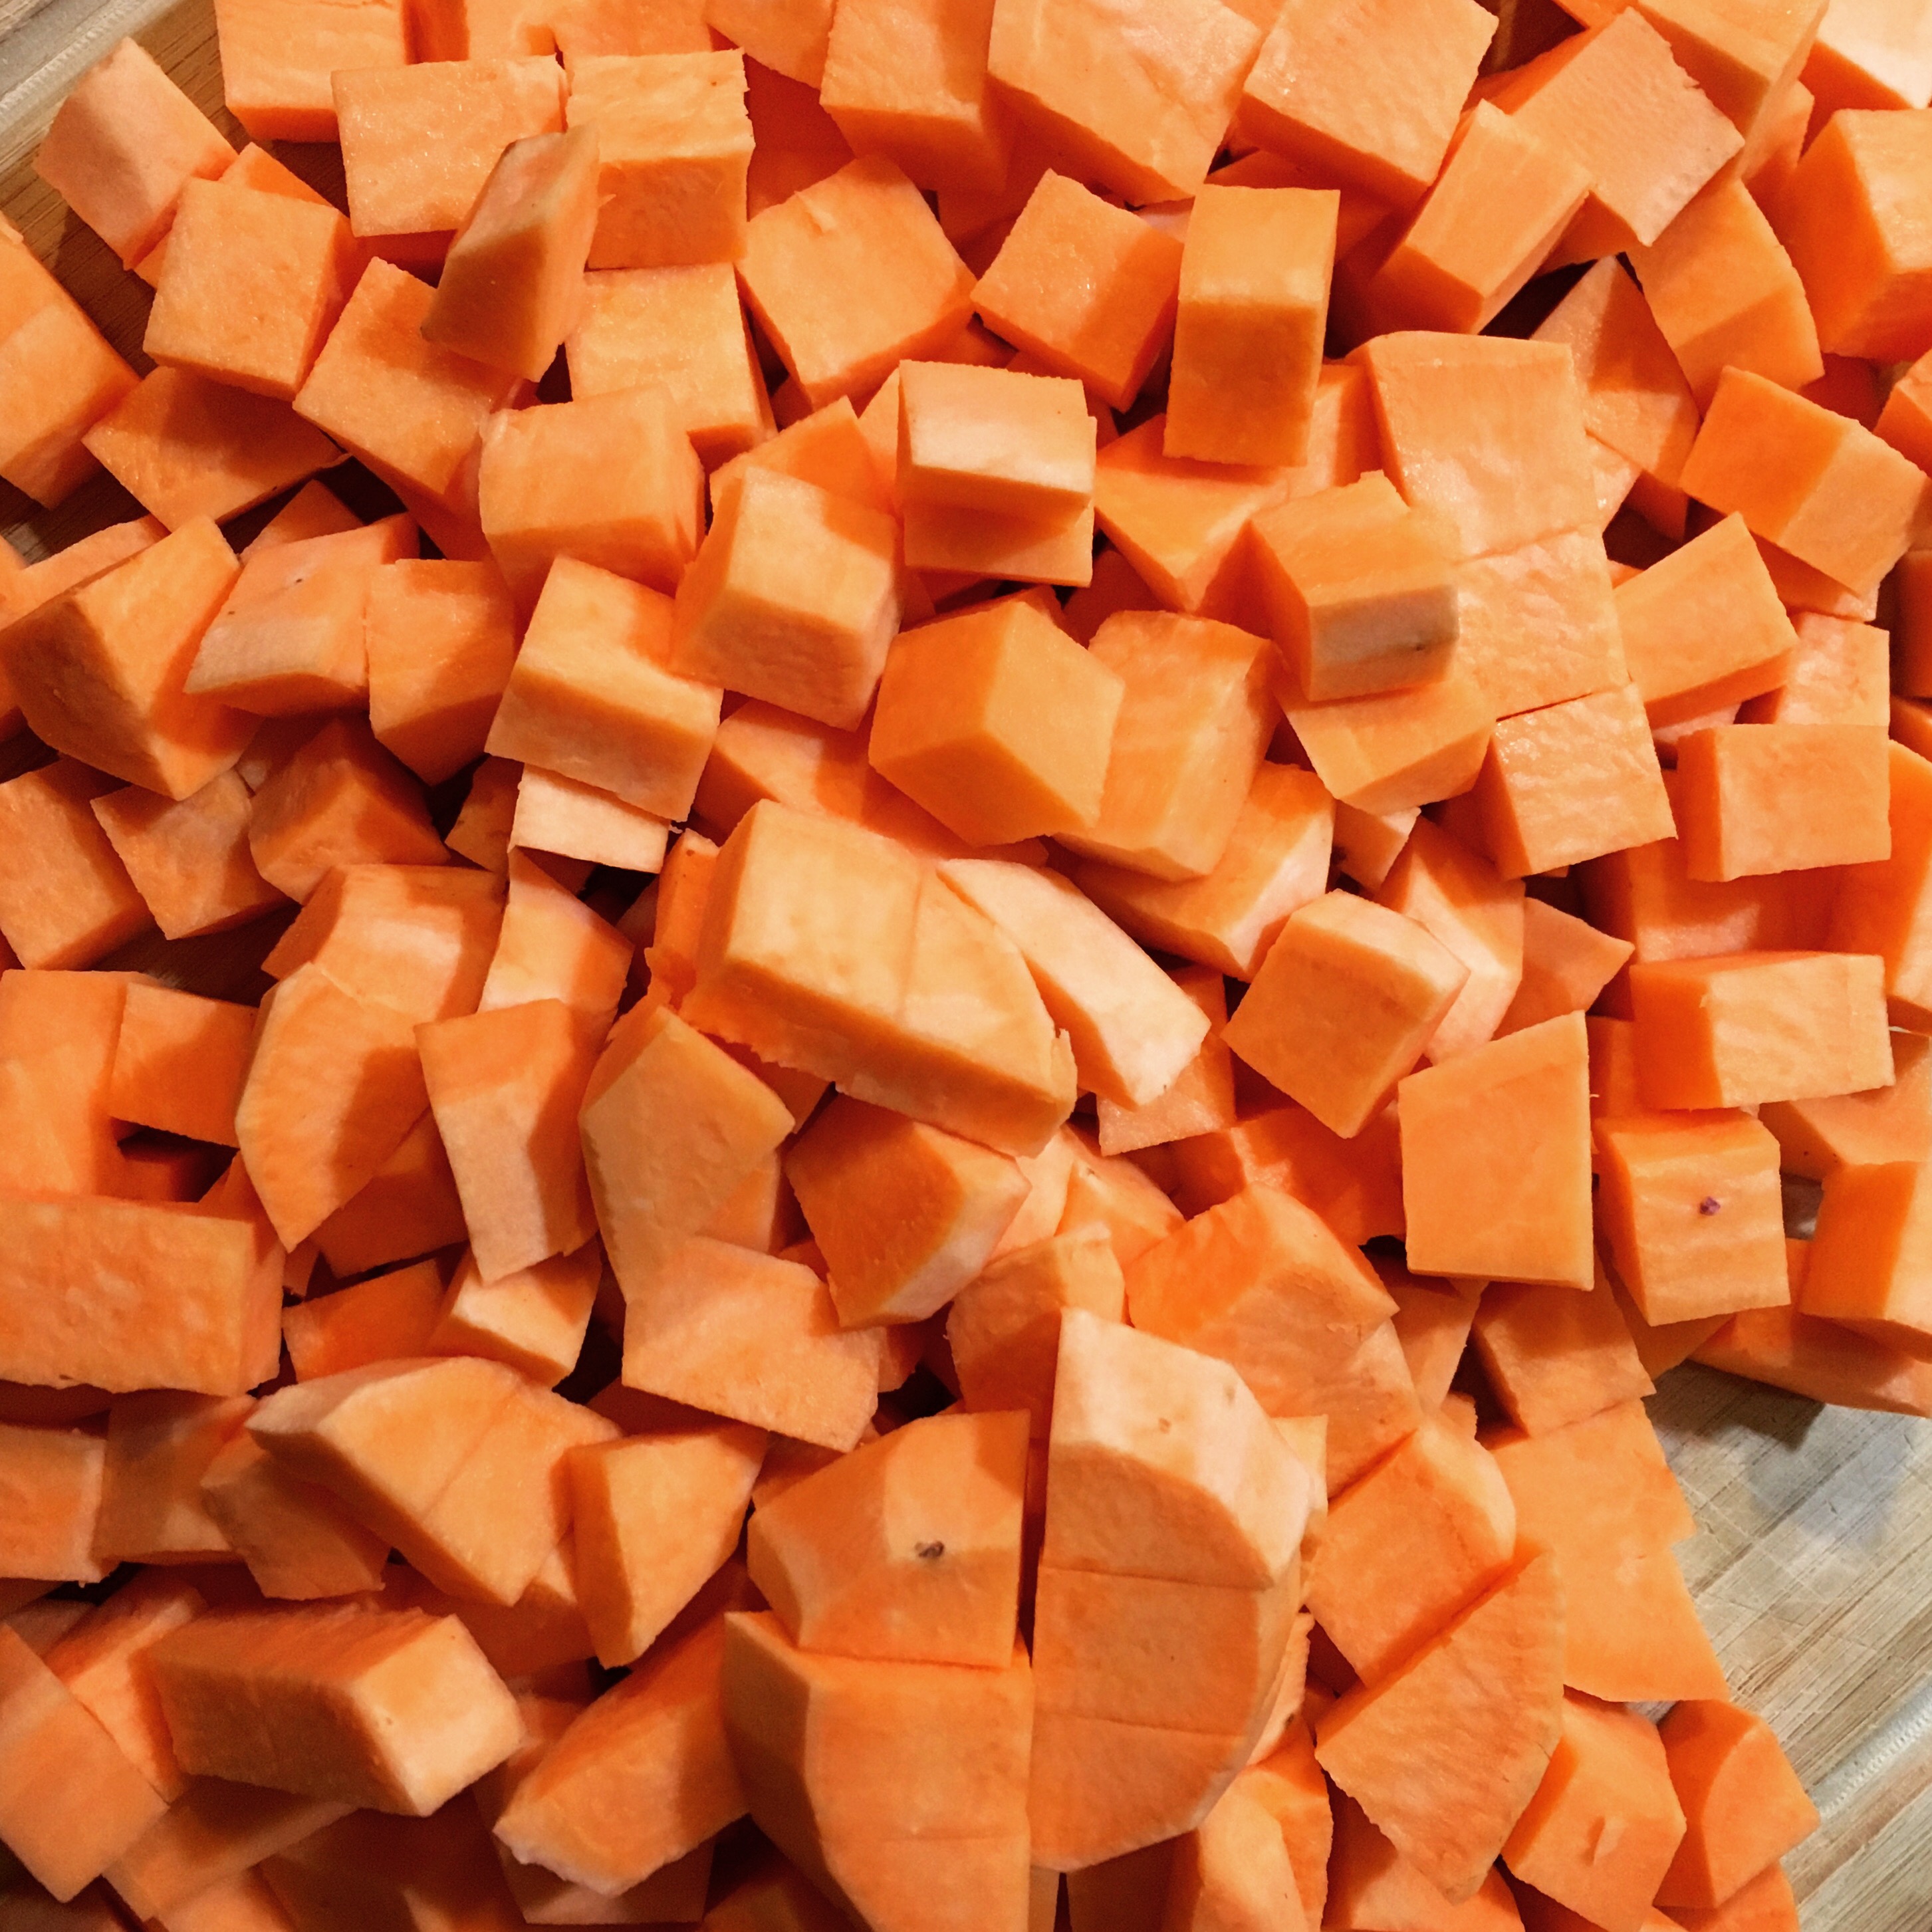 Cubed Sweet Potatoes